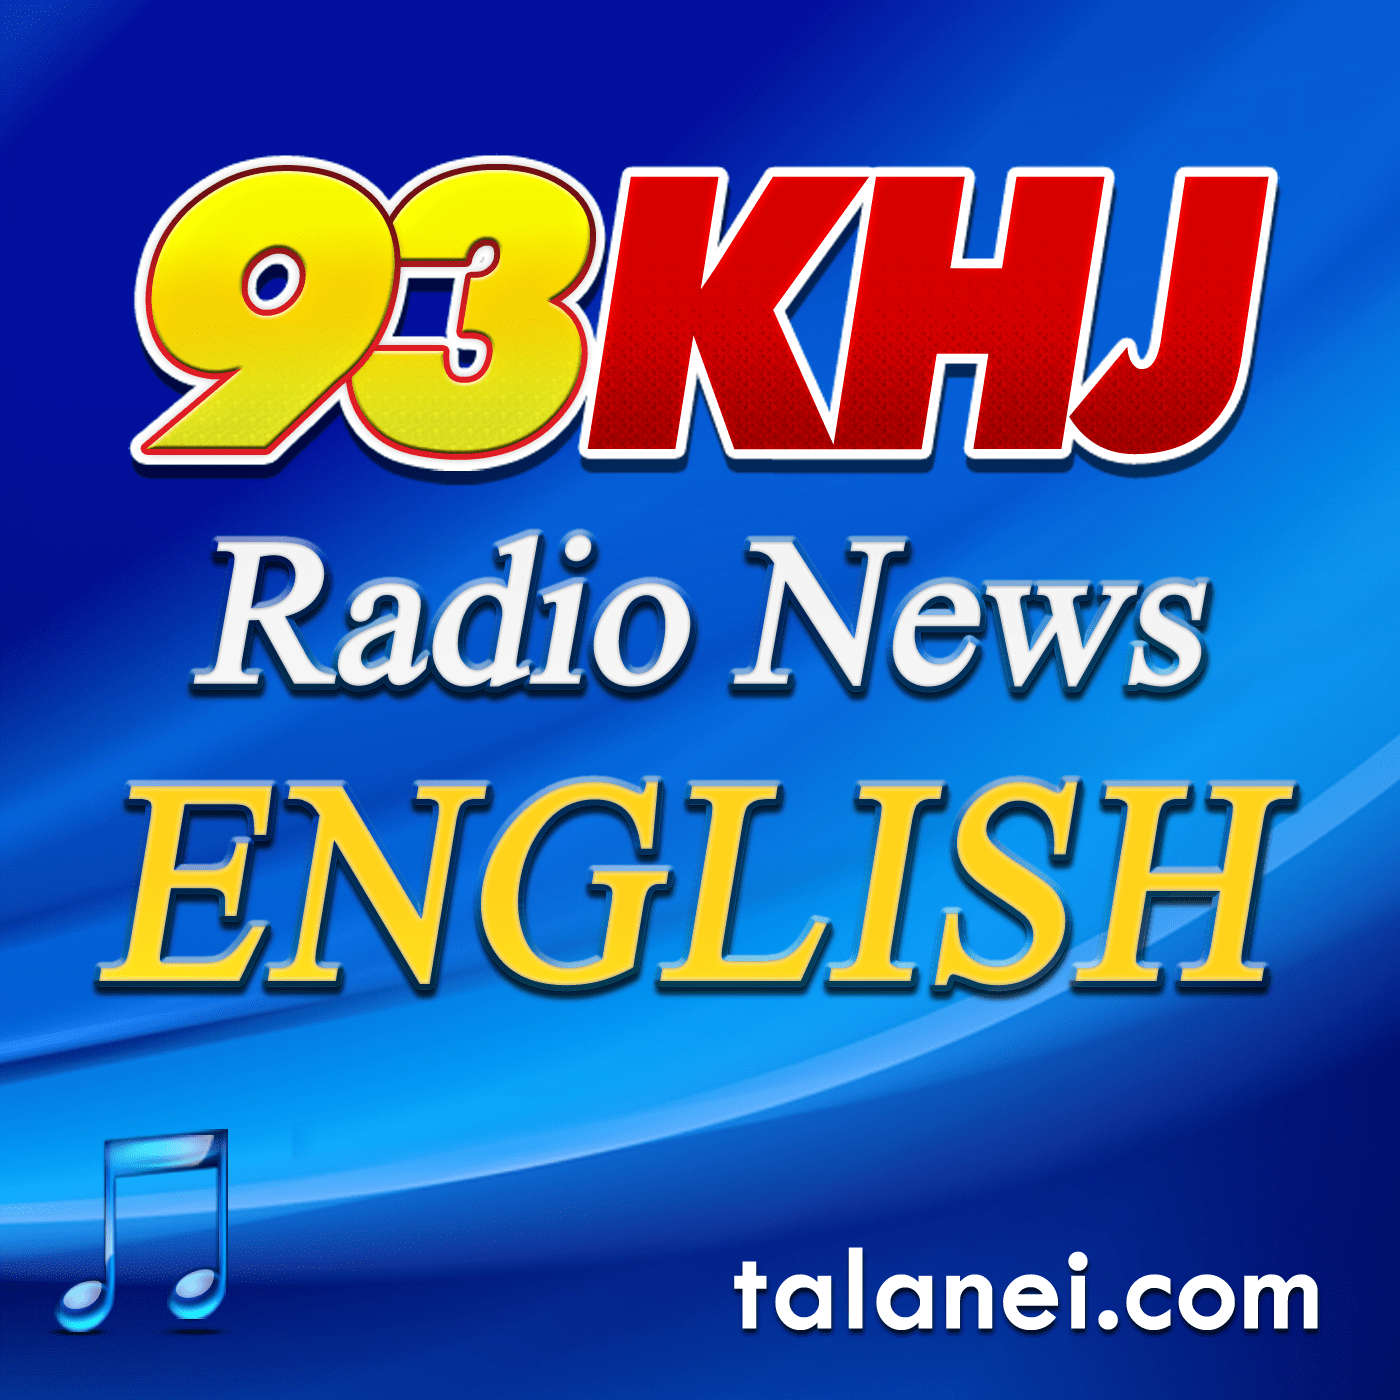 KHJ News in English